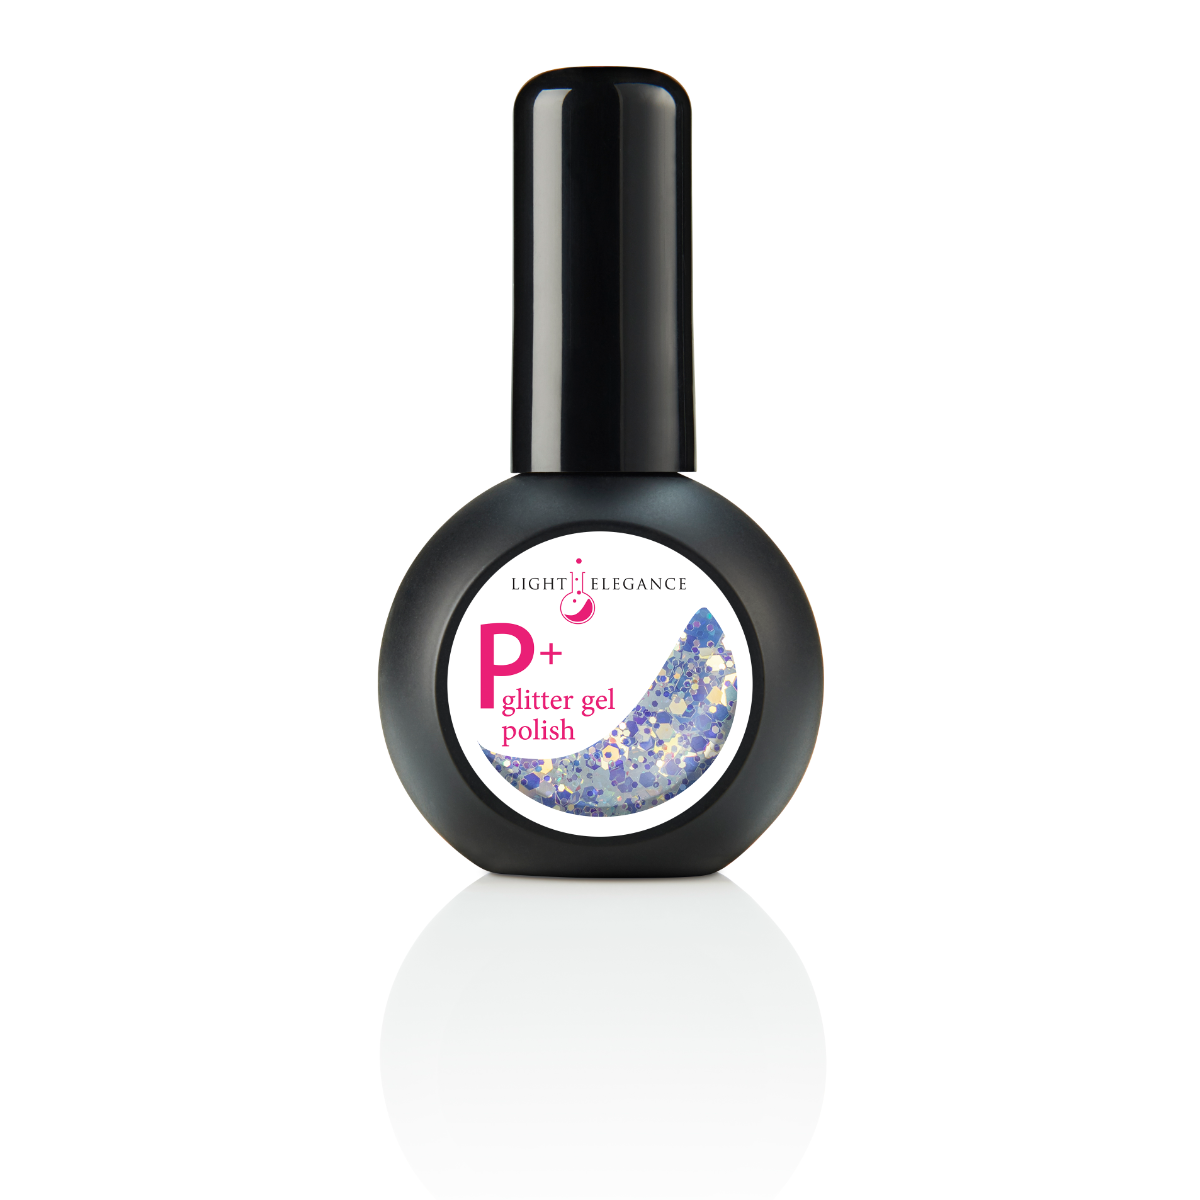 Light Elegance P+ Soak Off Glitter Gel - Sparkles or Sequins? - Creata Beauty - Professional Beauty Products